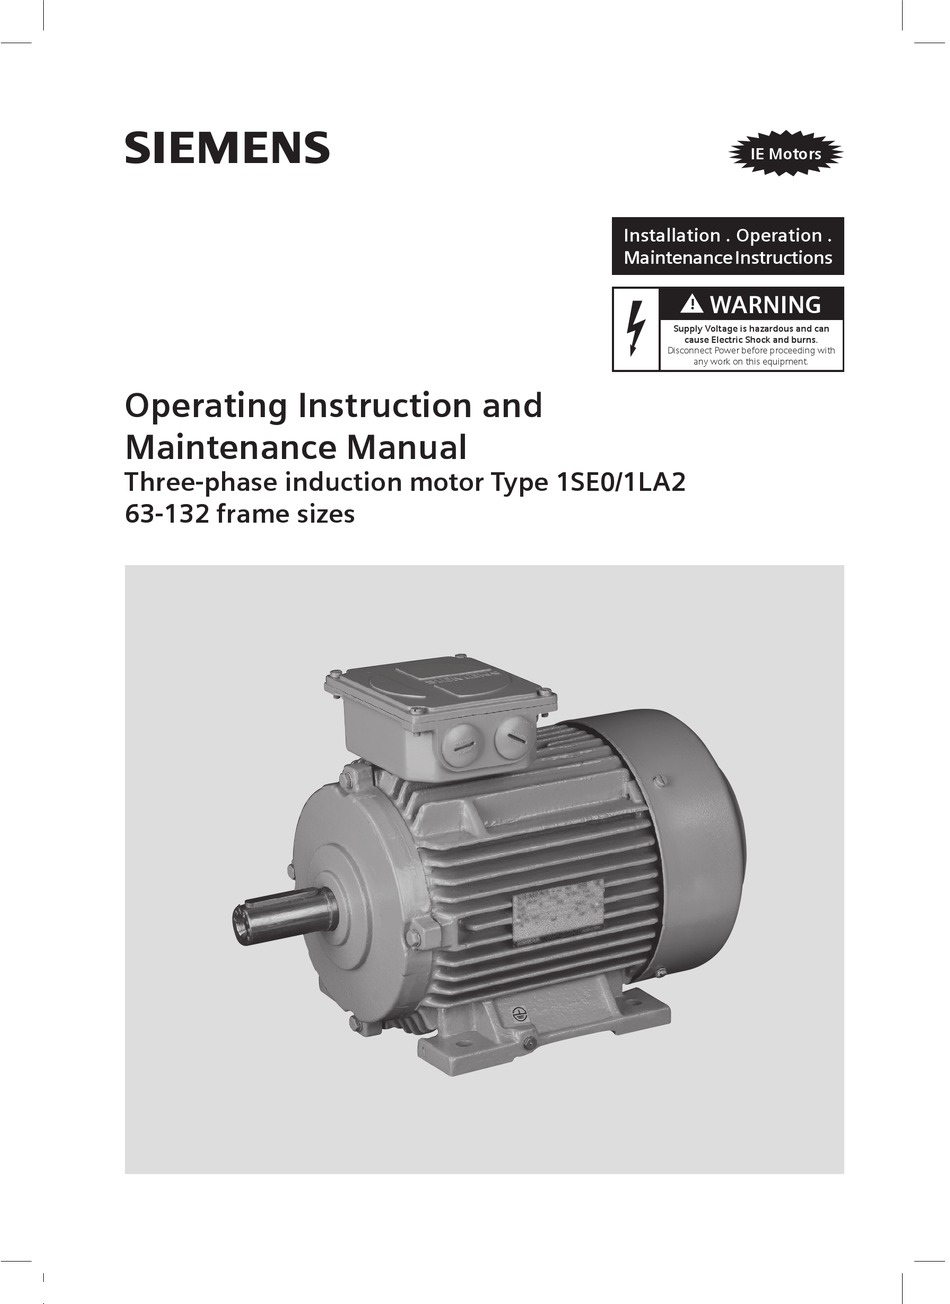 Siemens motor cinemático maintenance 1ft5042-0af71-1 motor reconditioning 